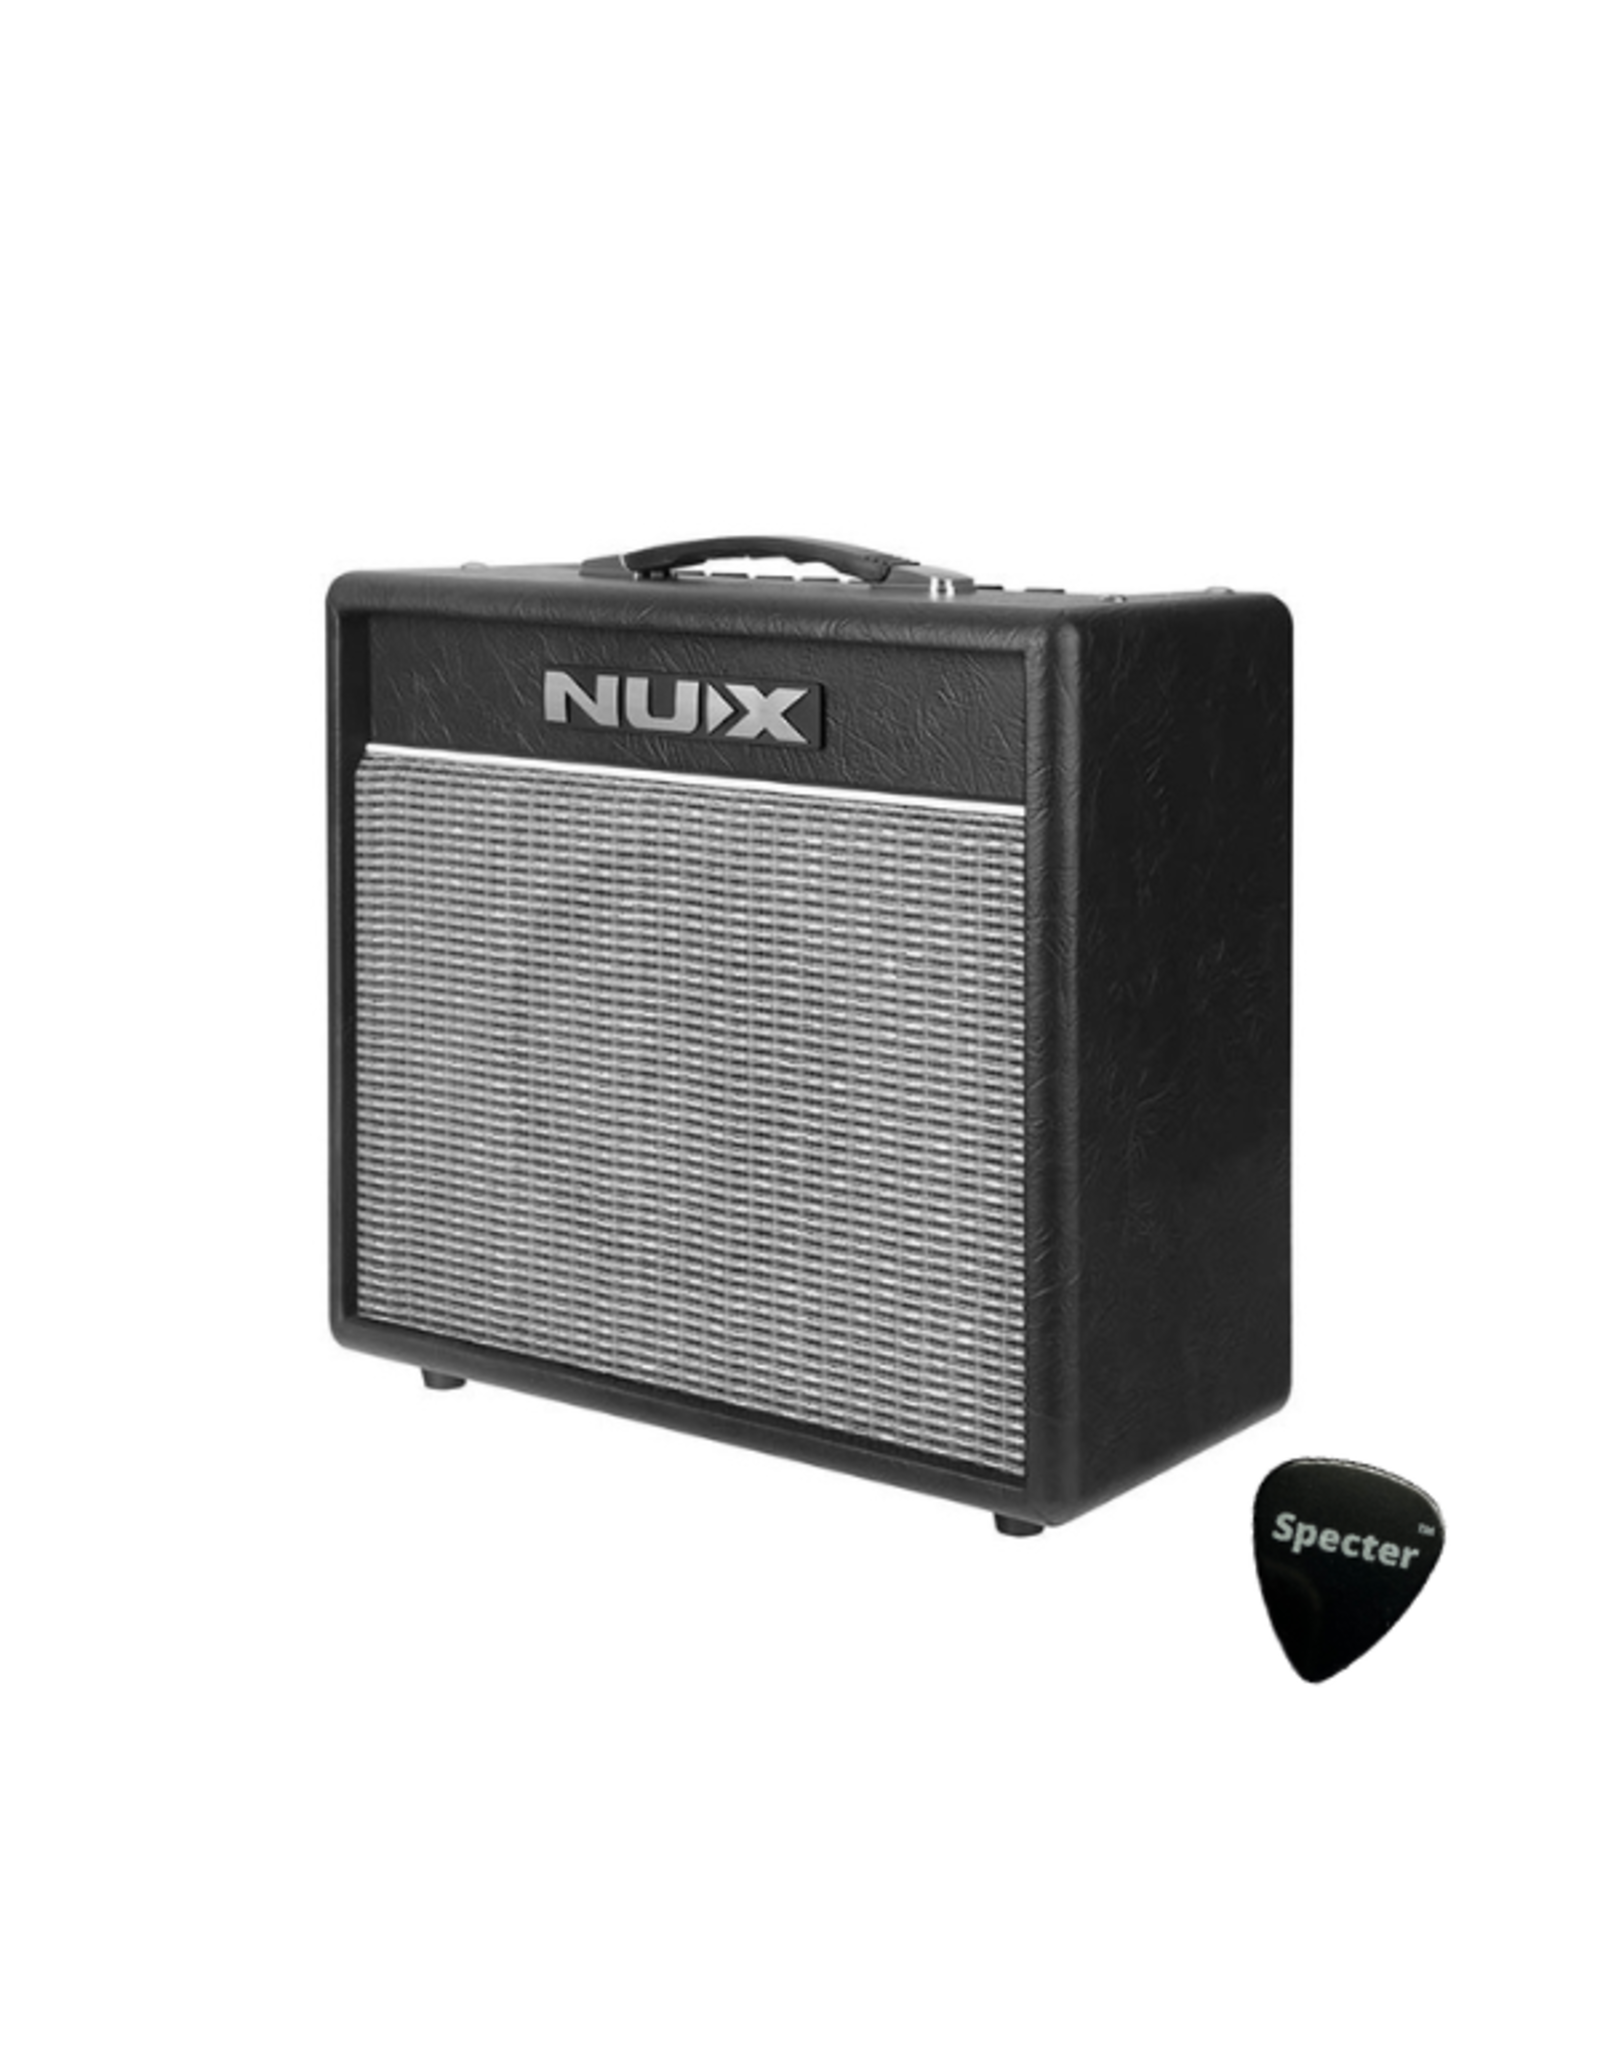 nux NUX Mighty Series digitale versterker 20 Watt - 8" speaker - bluetooth - DSP - via app aanstuurbaar - 3-band EQ - Specter Plectrum